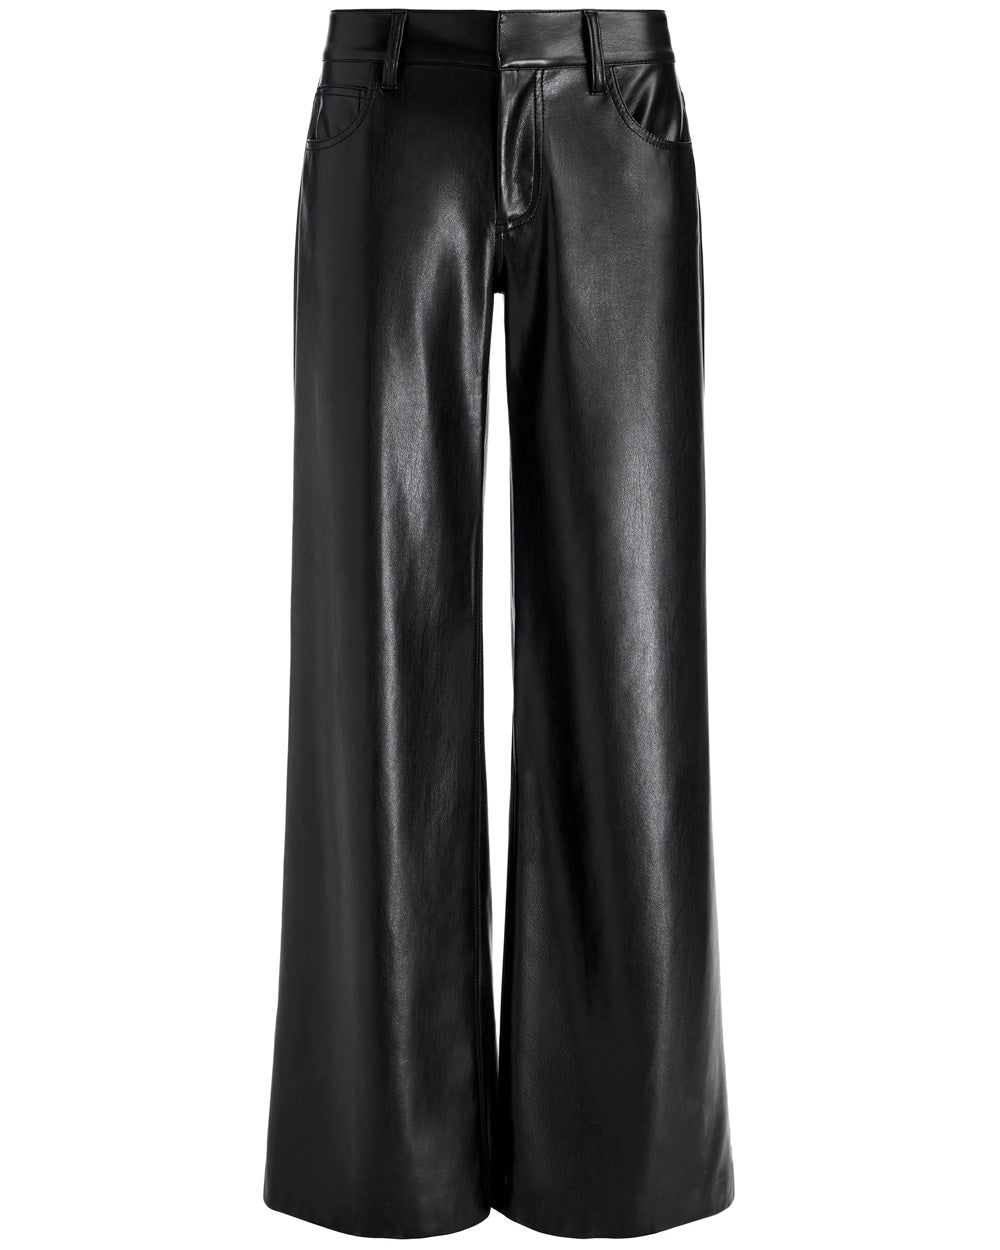 Black Vegan Leather Baggy Trish Pant